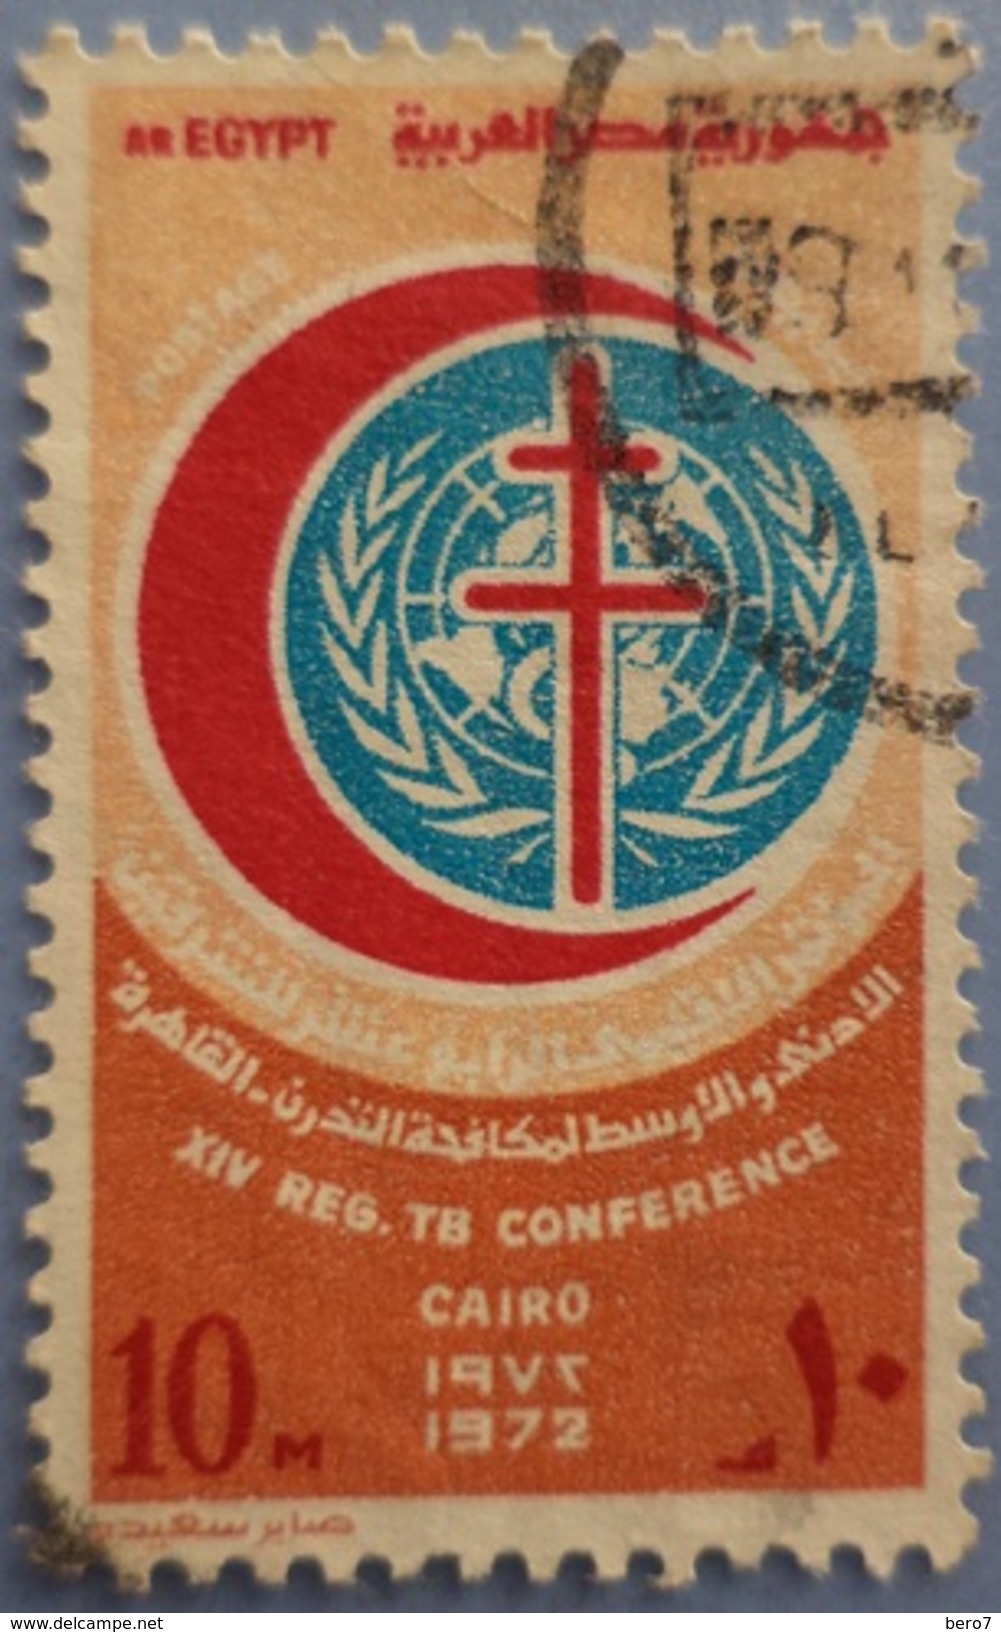 ُEGYPT 1972 XIV REG. TB Conference [USED] (Egypte) (Egitto) (Ägypten) (Egipto) (Egypten) - Gebraucht